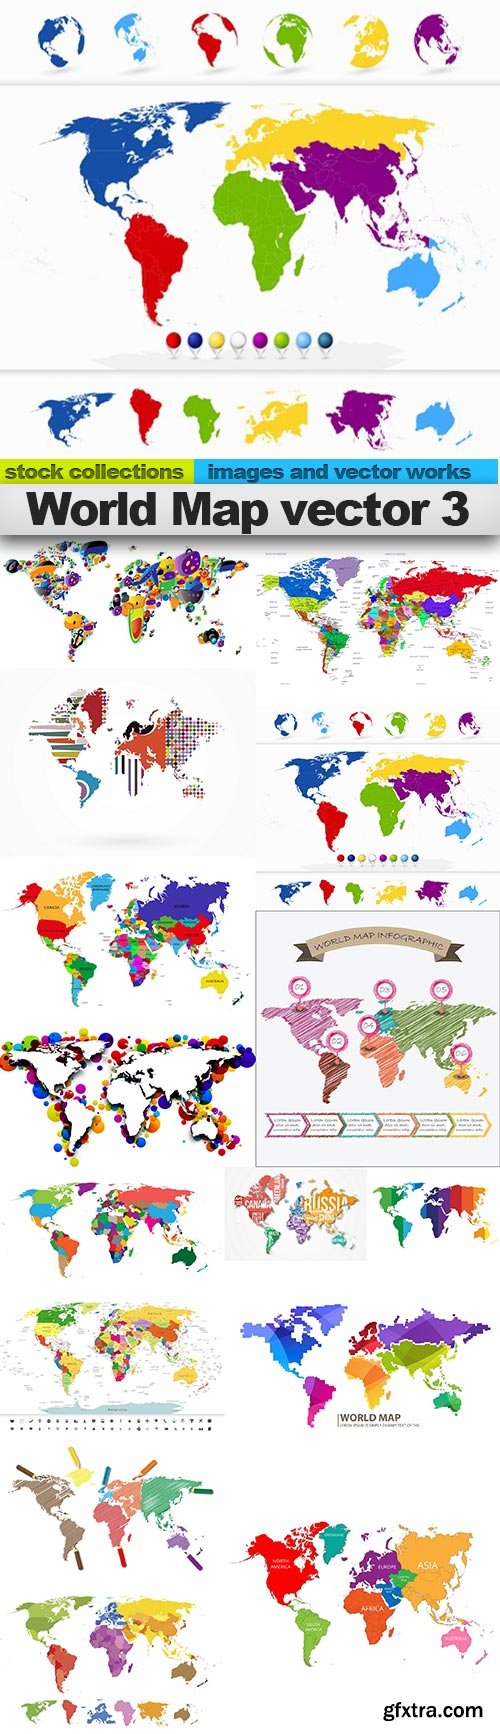 World Map vector 3, 15 x EPS